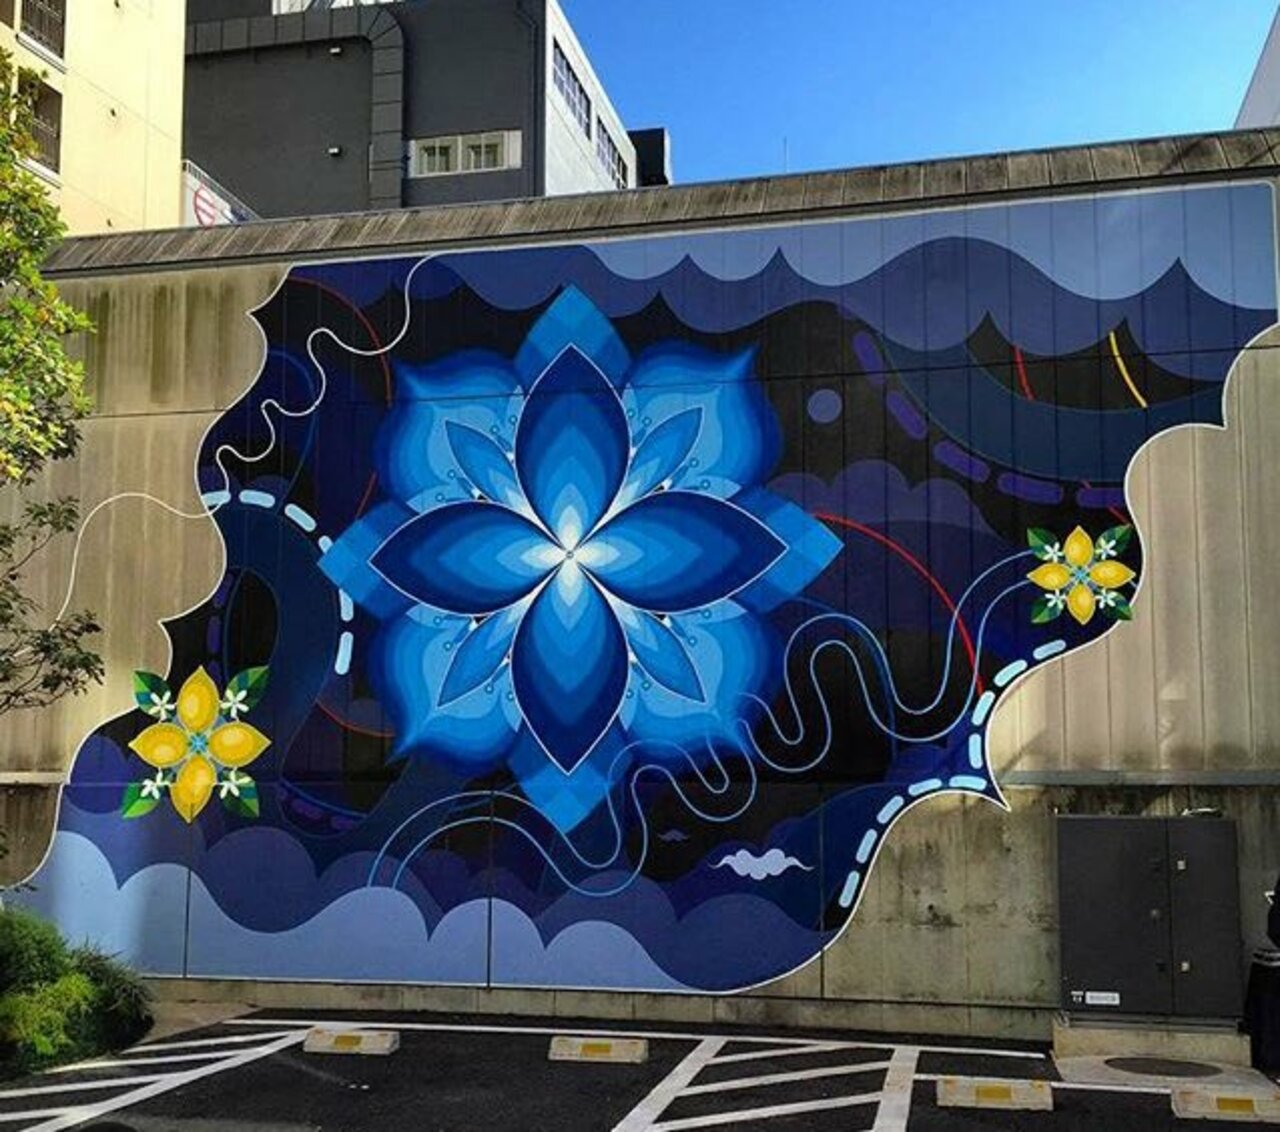 New Street Art by htzk, kami_htzk + sasu_lyri 

#art #graffiti #mural #streetart https://t.co/6aHjmx8jp0